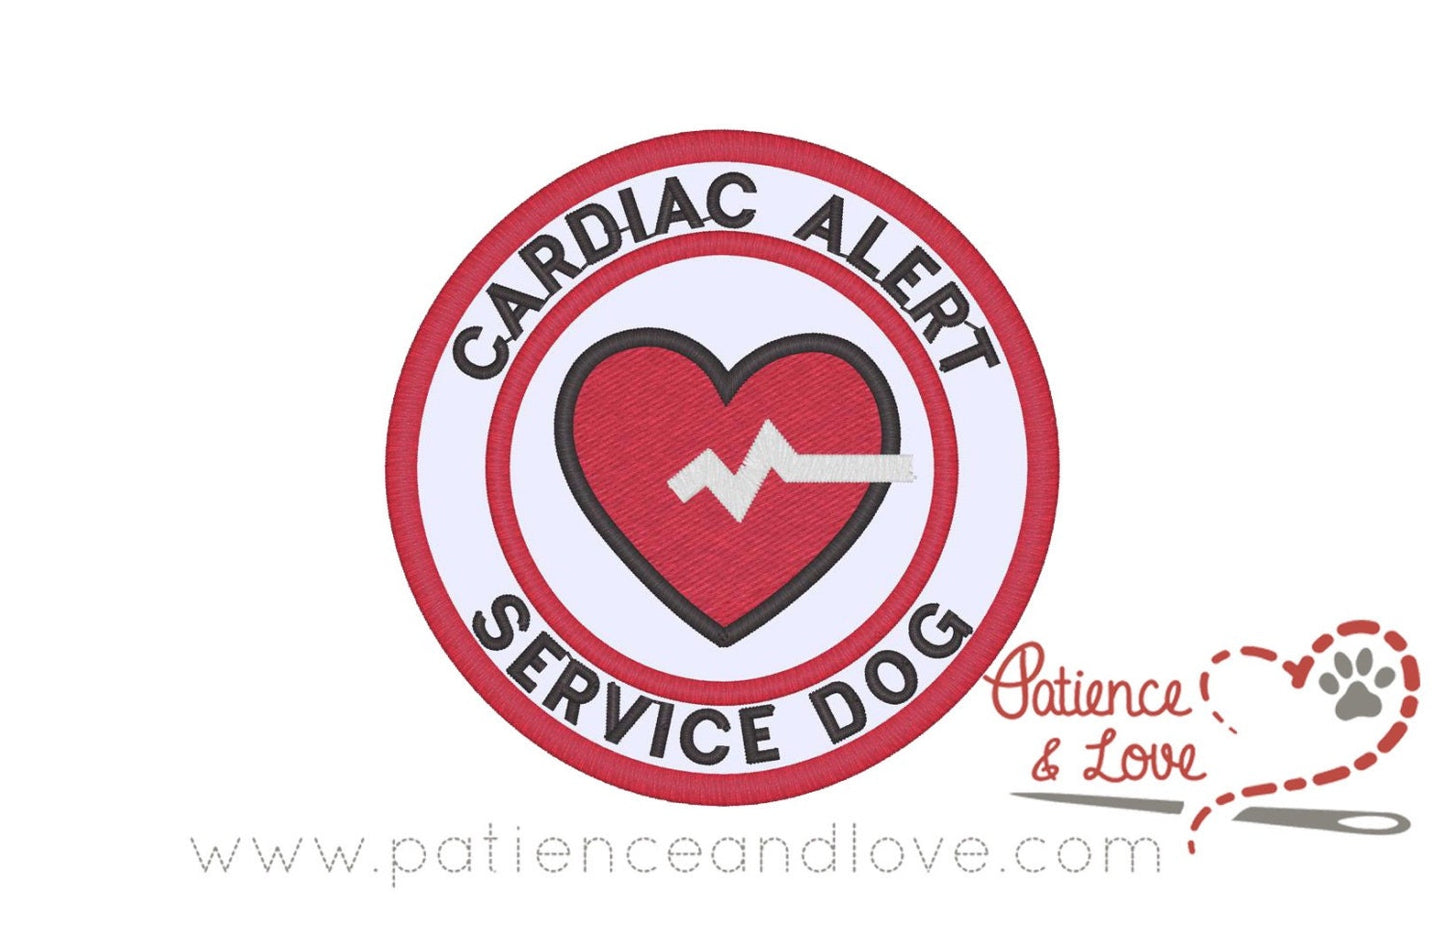 cardiac alert service dog, heart with ekg, 3-inch round patch